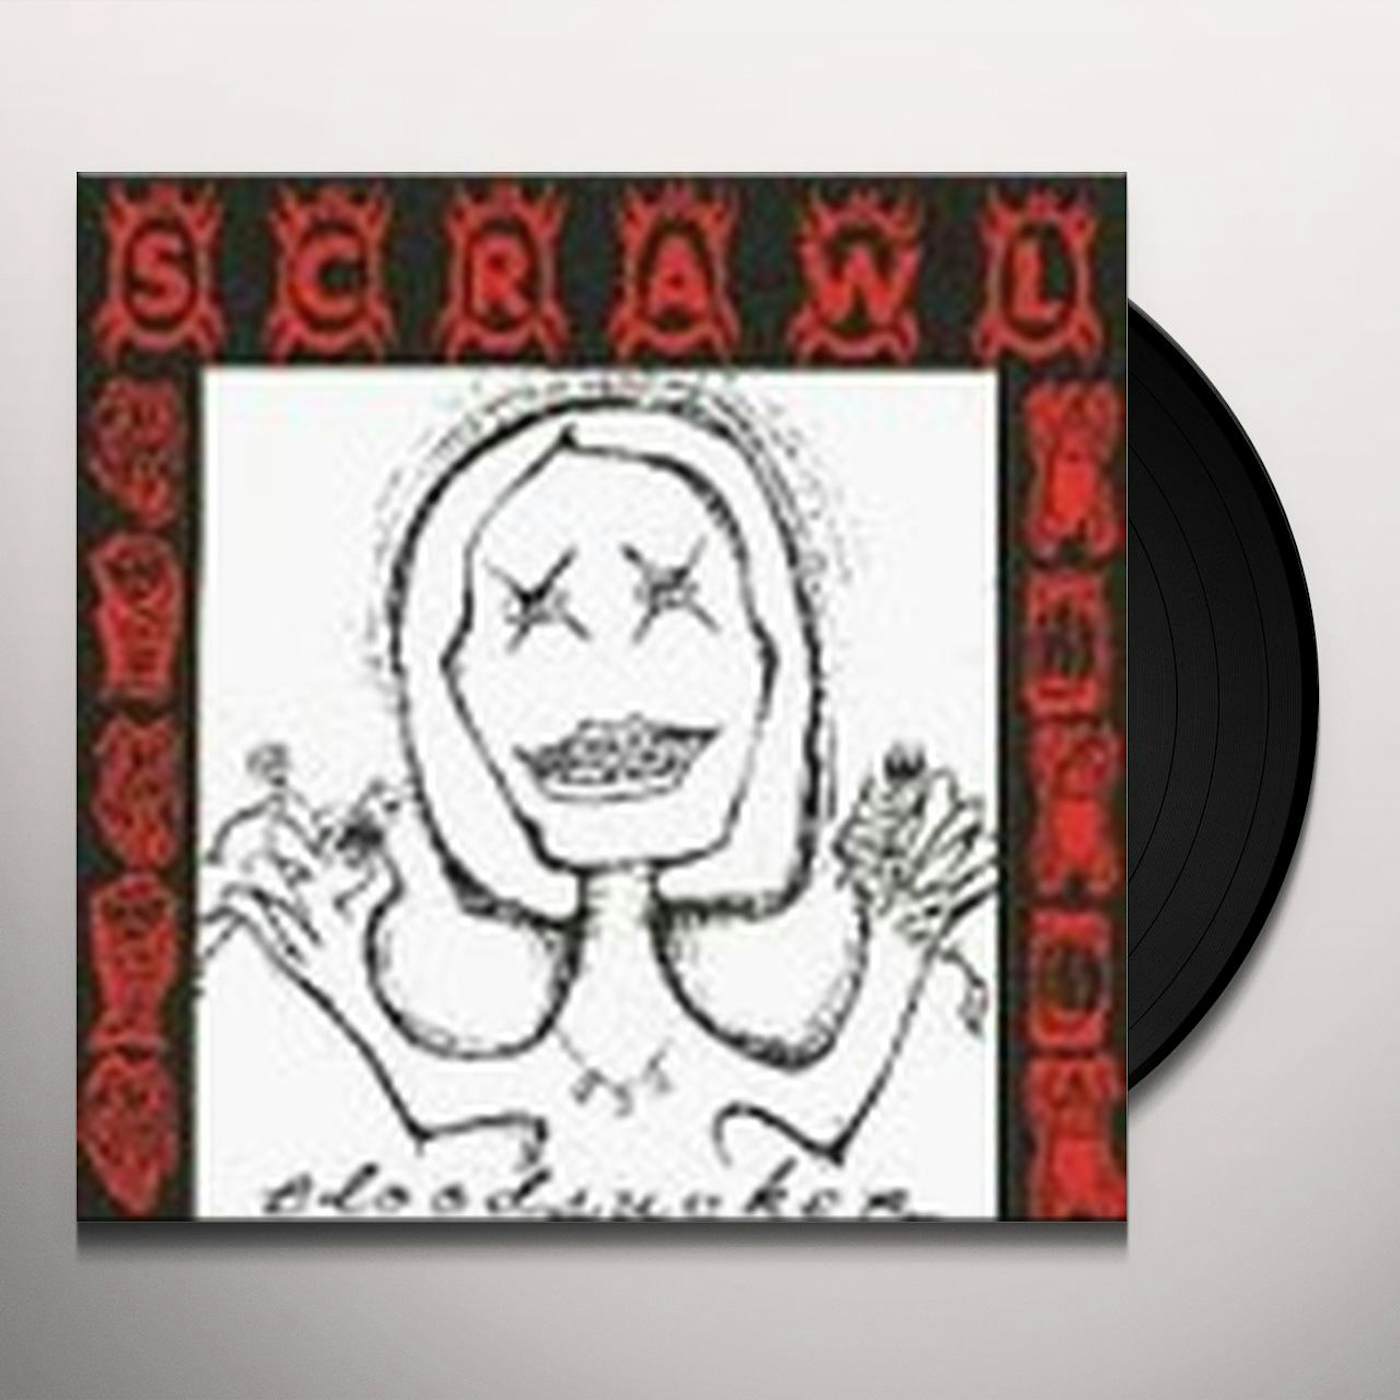 Scrawl Bloodsucker Vinyl Record